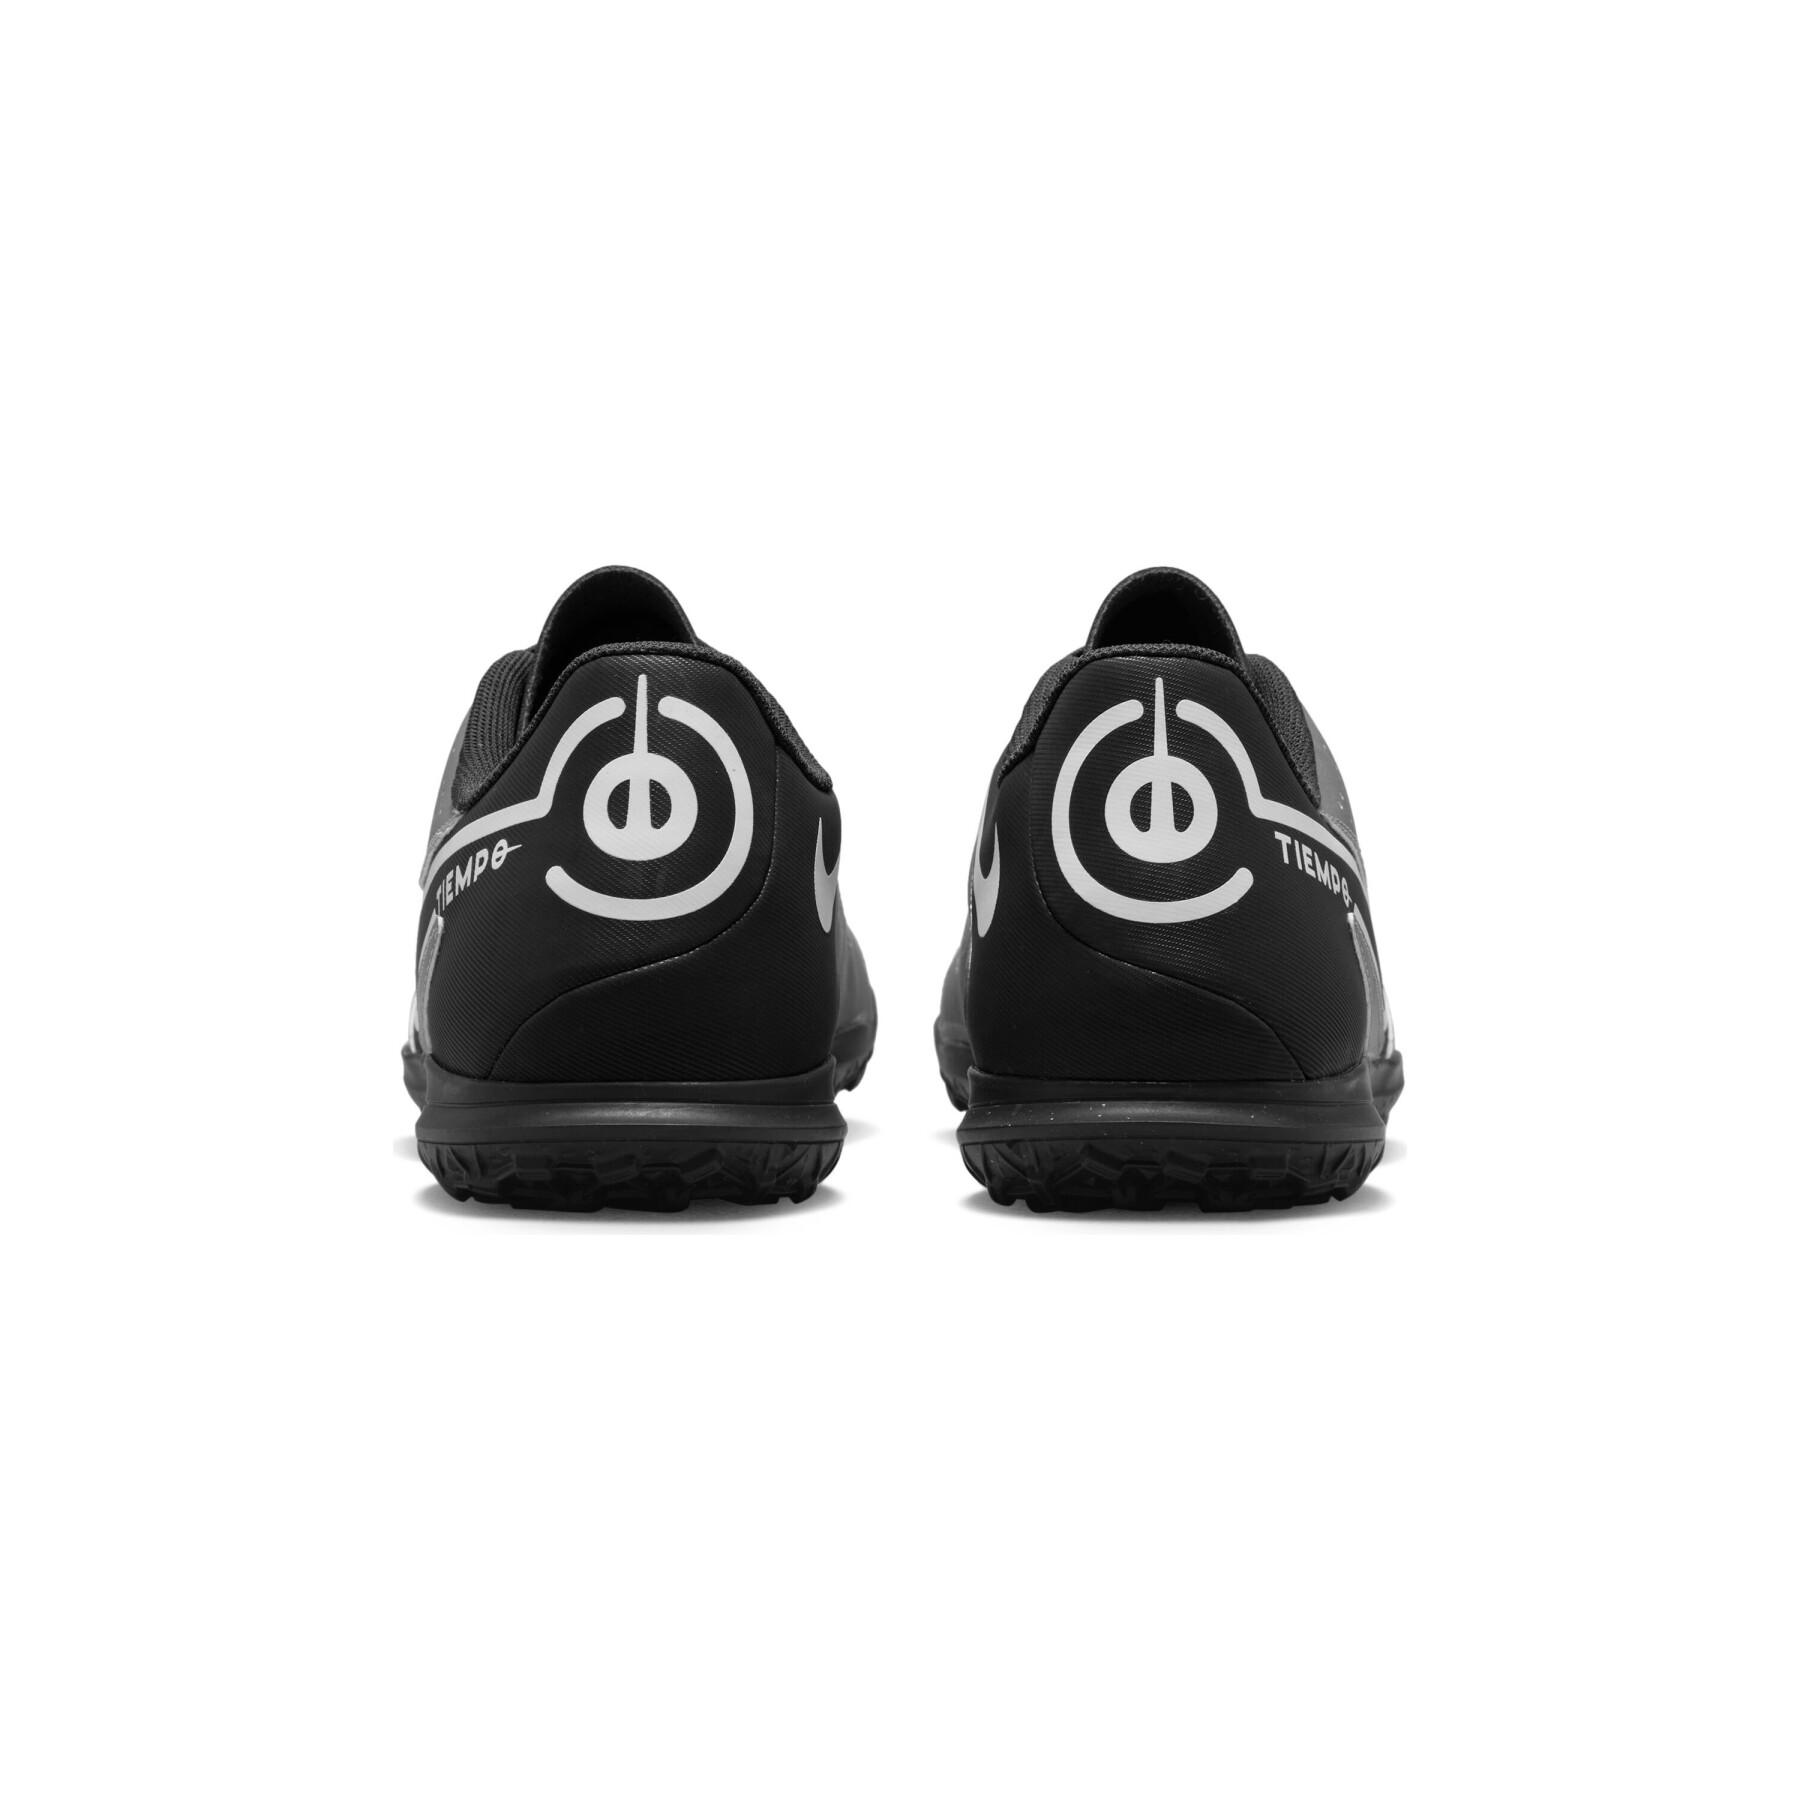 Chaussures de football Nike Tiempo Legend 9 Club Tf - Generation Pack